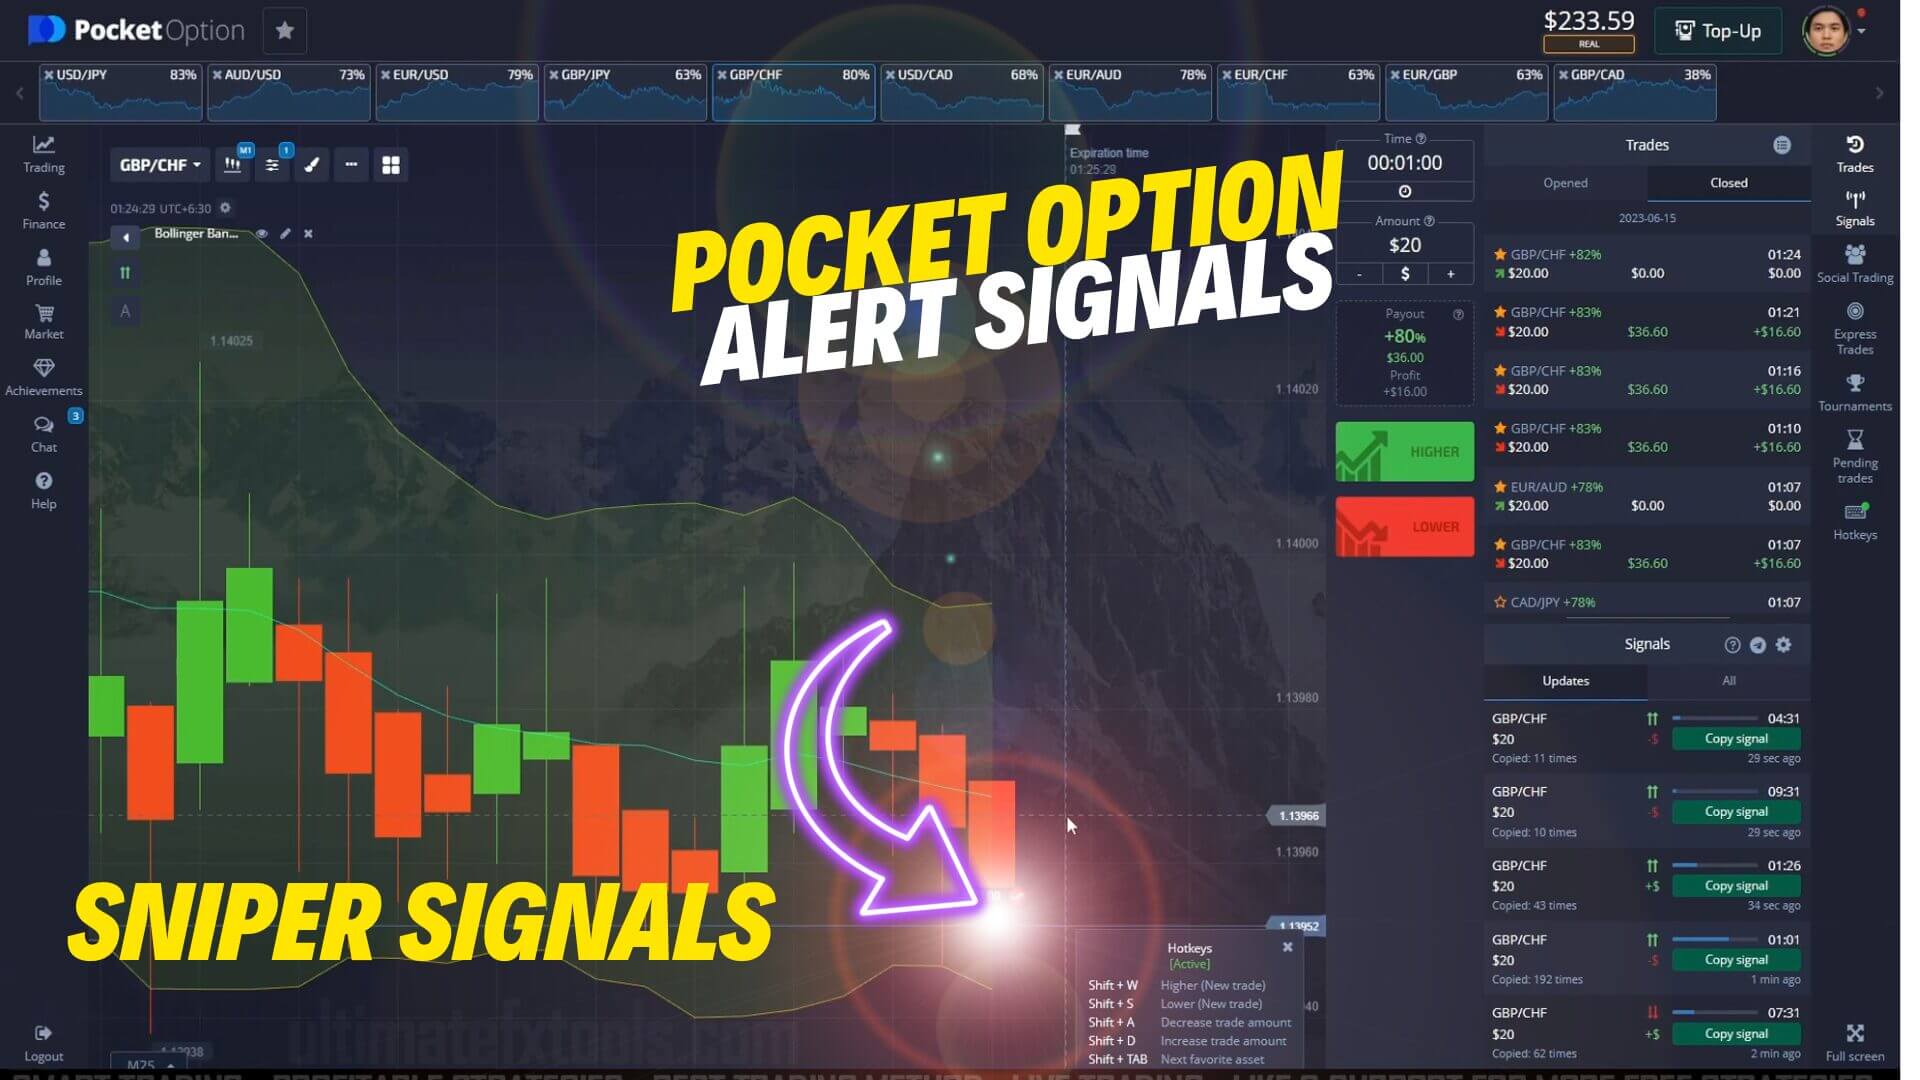 Pocket Option Alert Signals